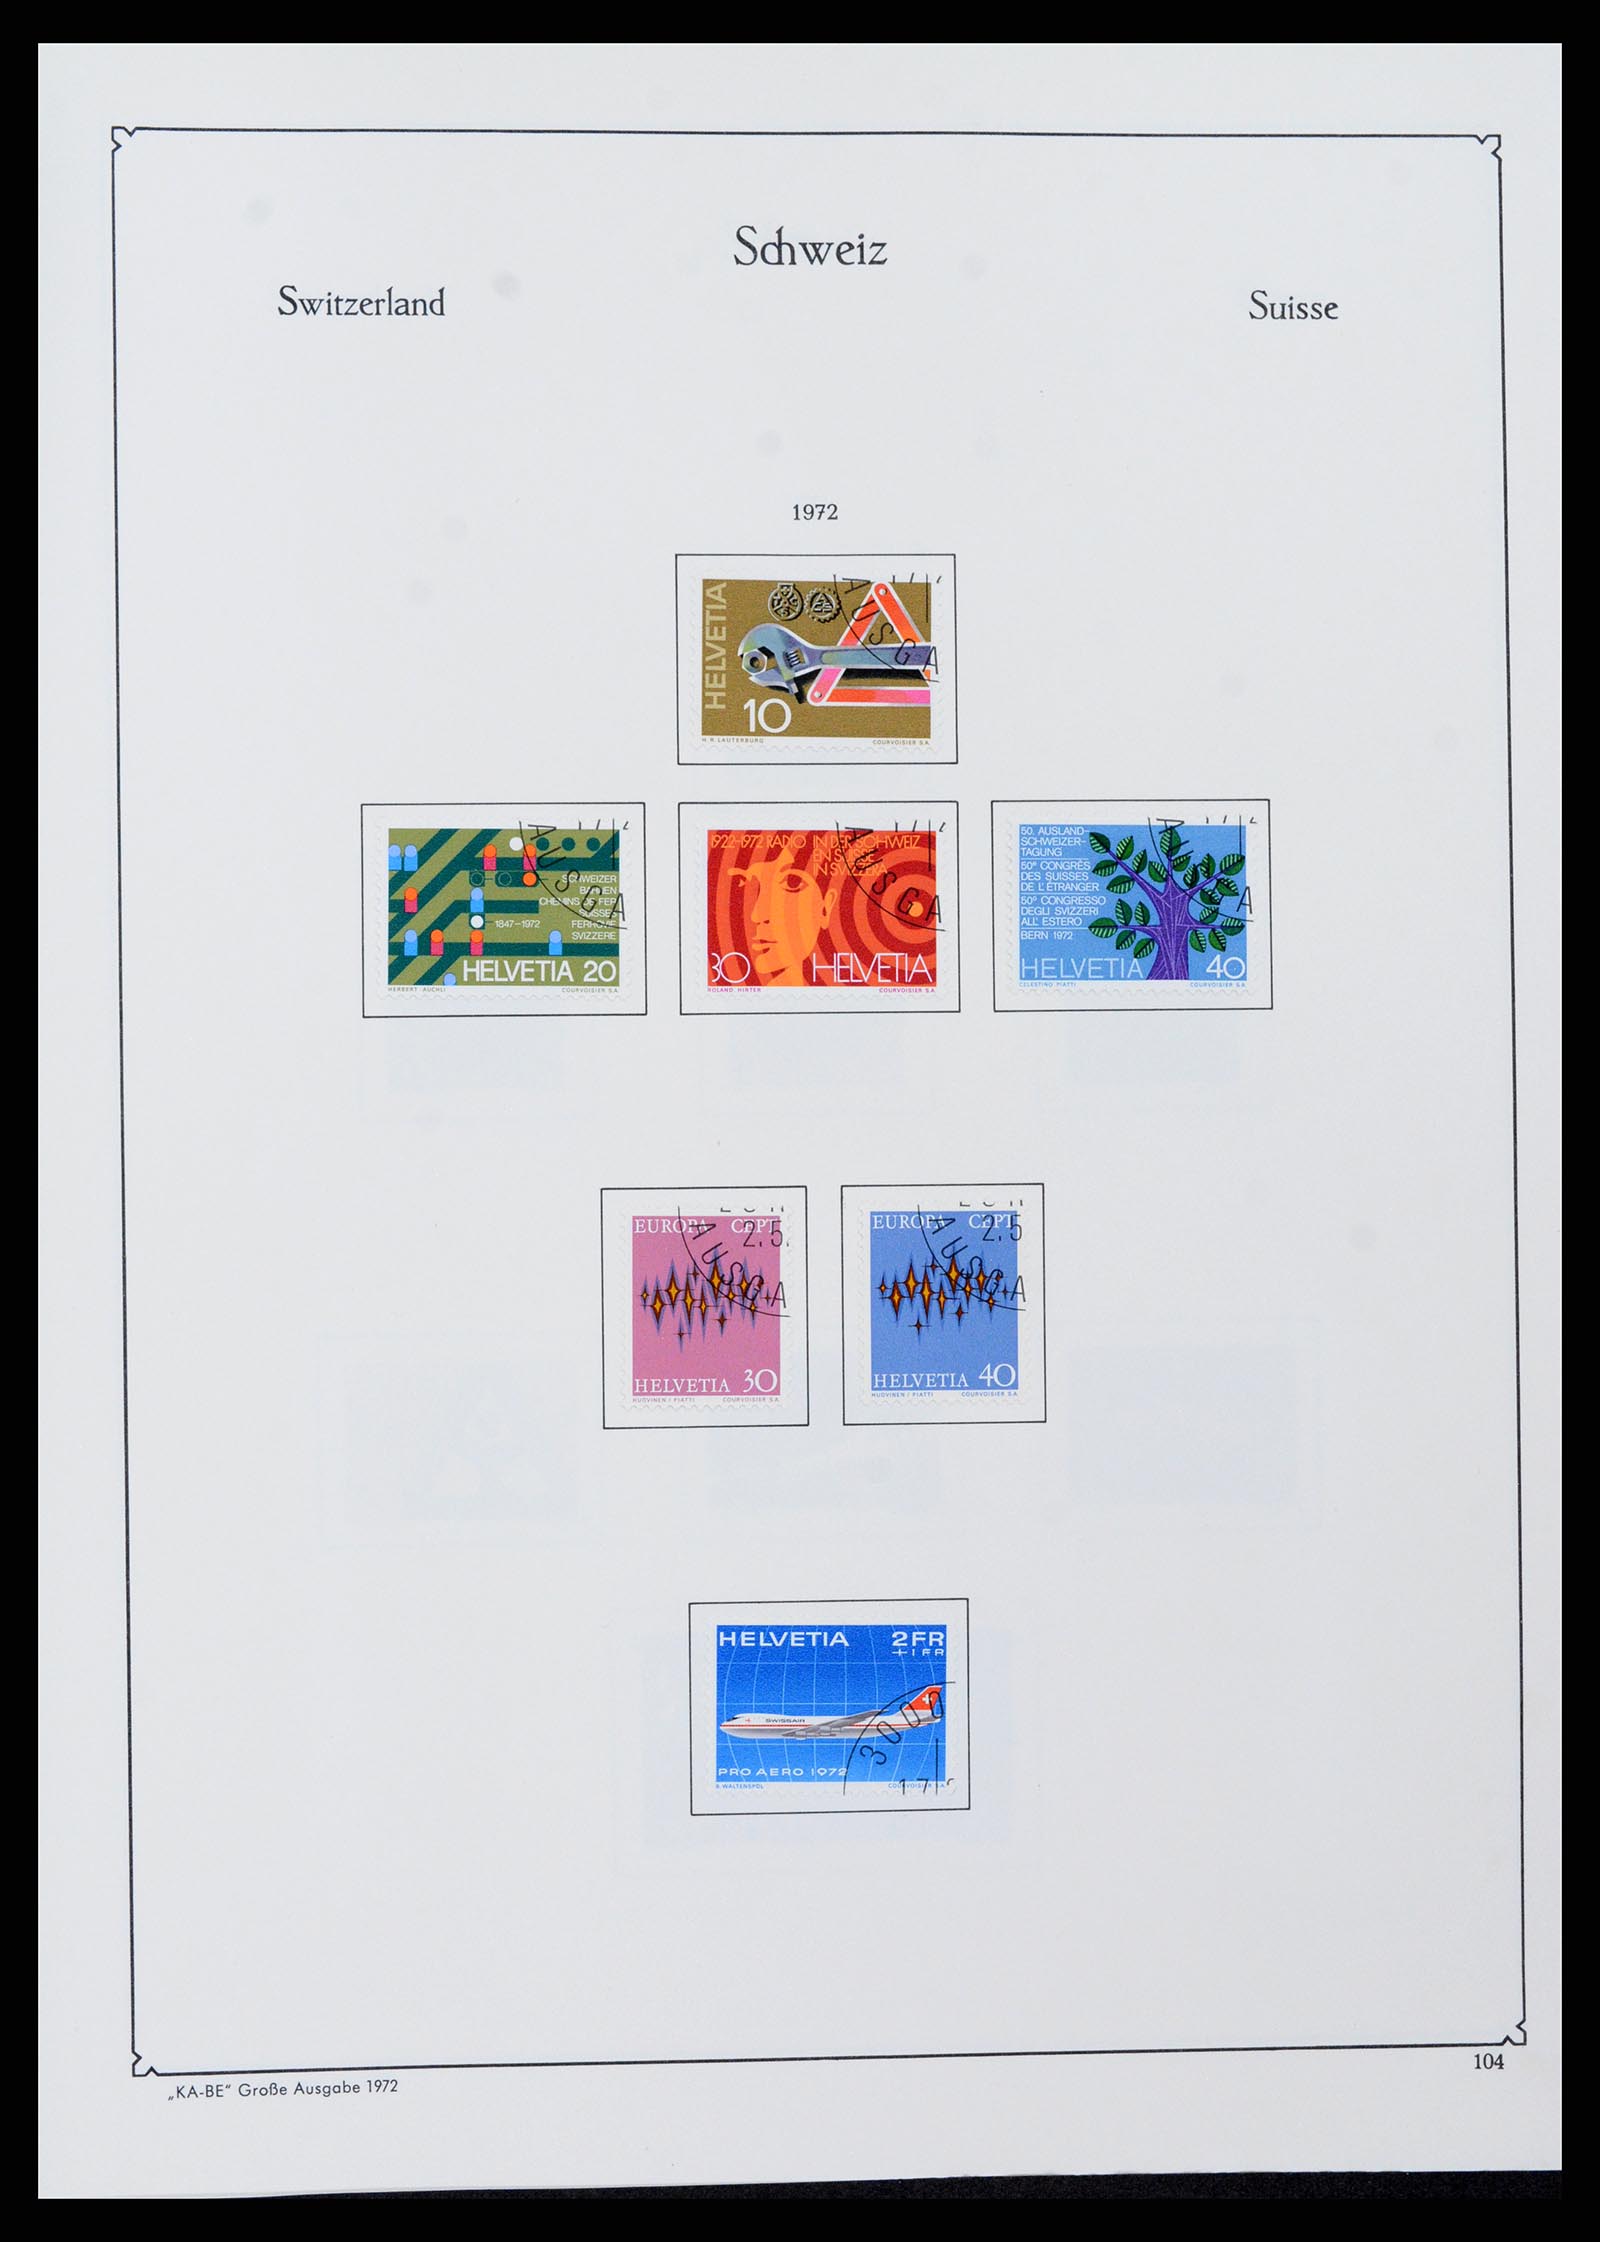 37588 105 - Stamp collection 37588 Switzerland 1854-1974.